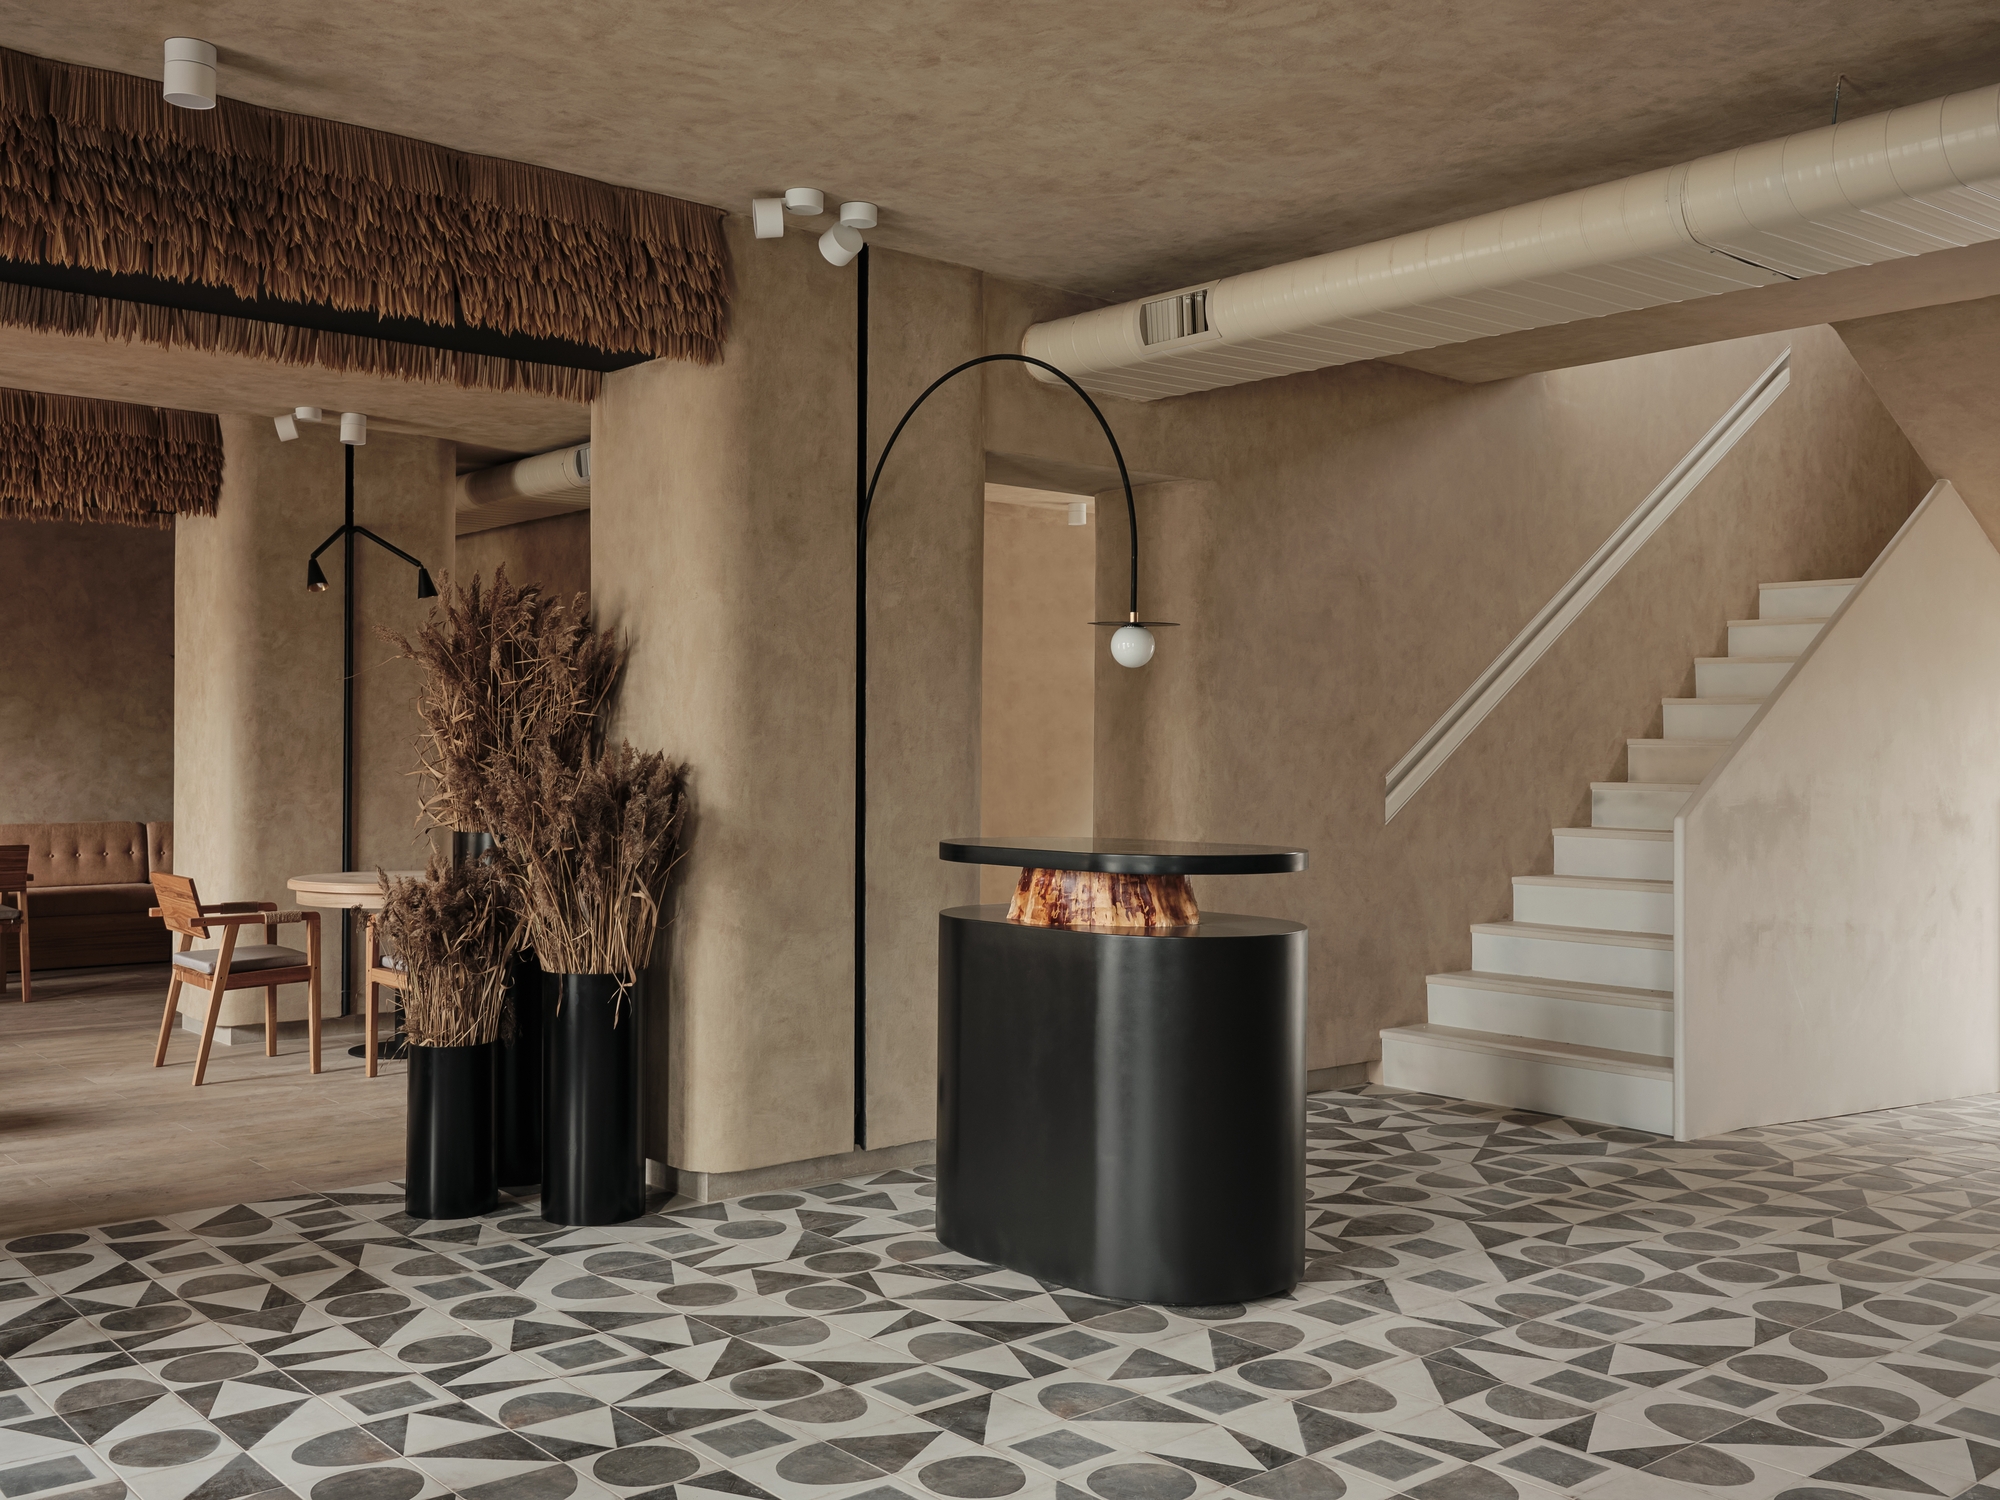 Fazenda餐厅|ART-Arrakis | 建筑室内设计的创新与灵感